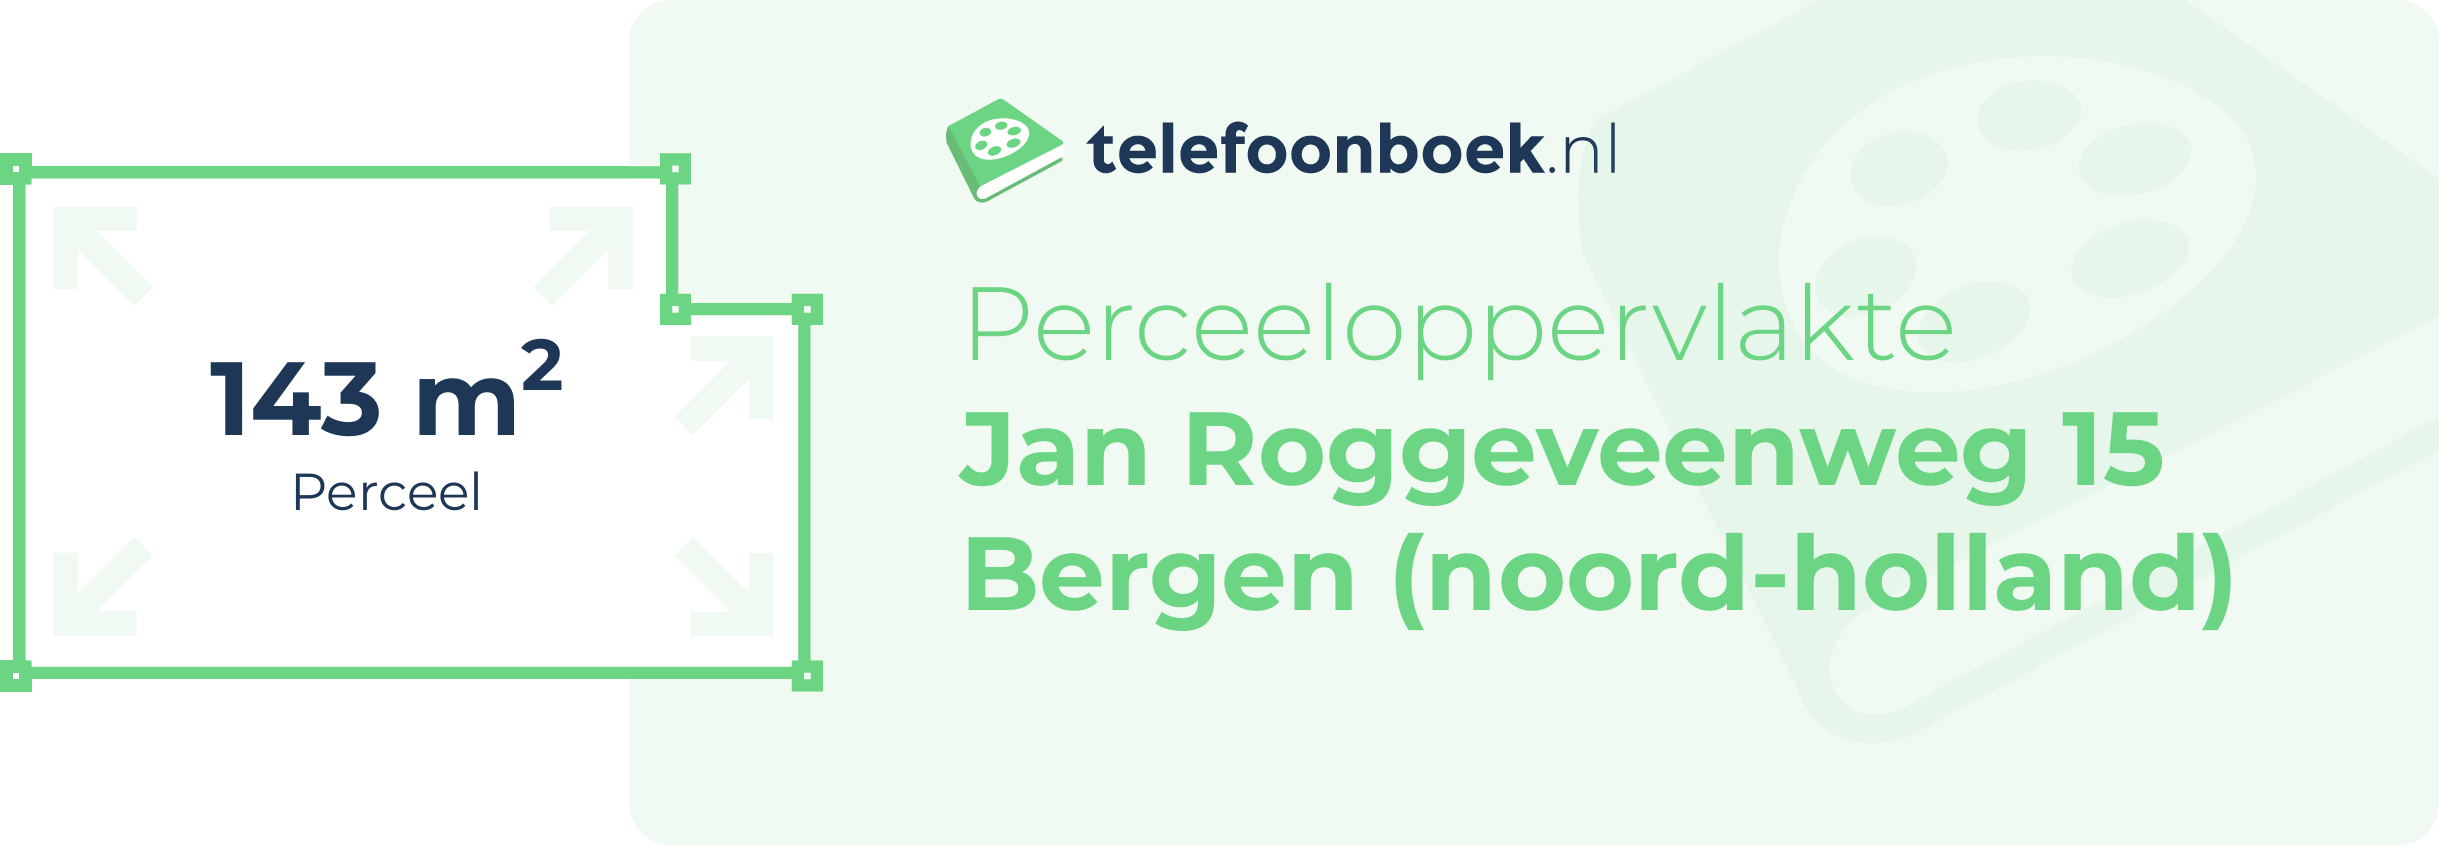 Perceeloppervlakte Jan Roggeveenweg 15 Bergen (Noord-Holland)